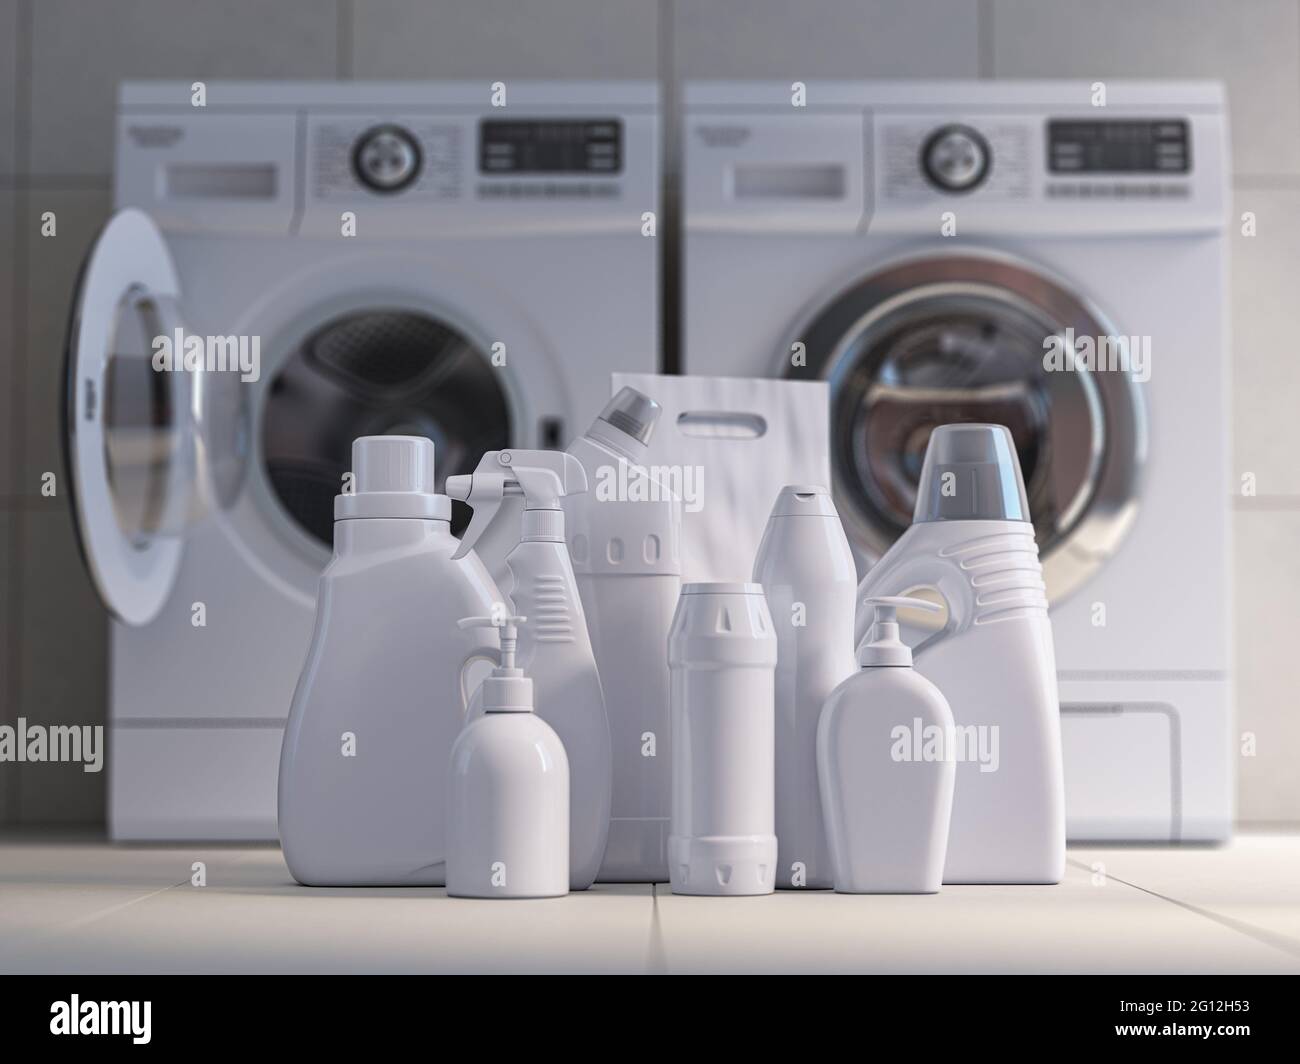 Washing machine, detergent bottles and powder. 3d illustration. Stock Photo